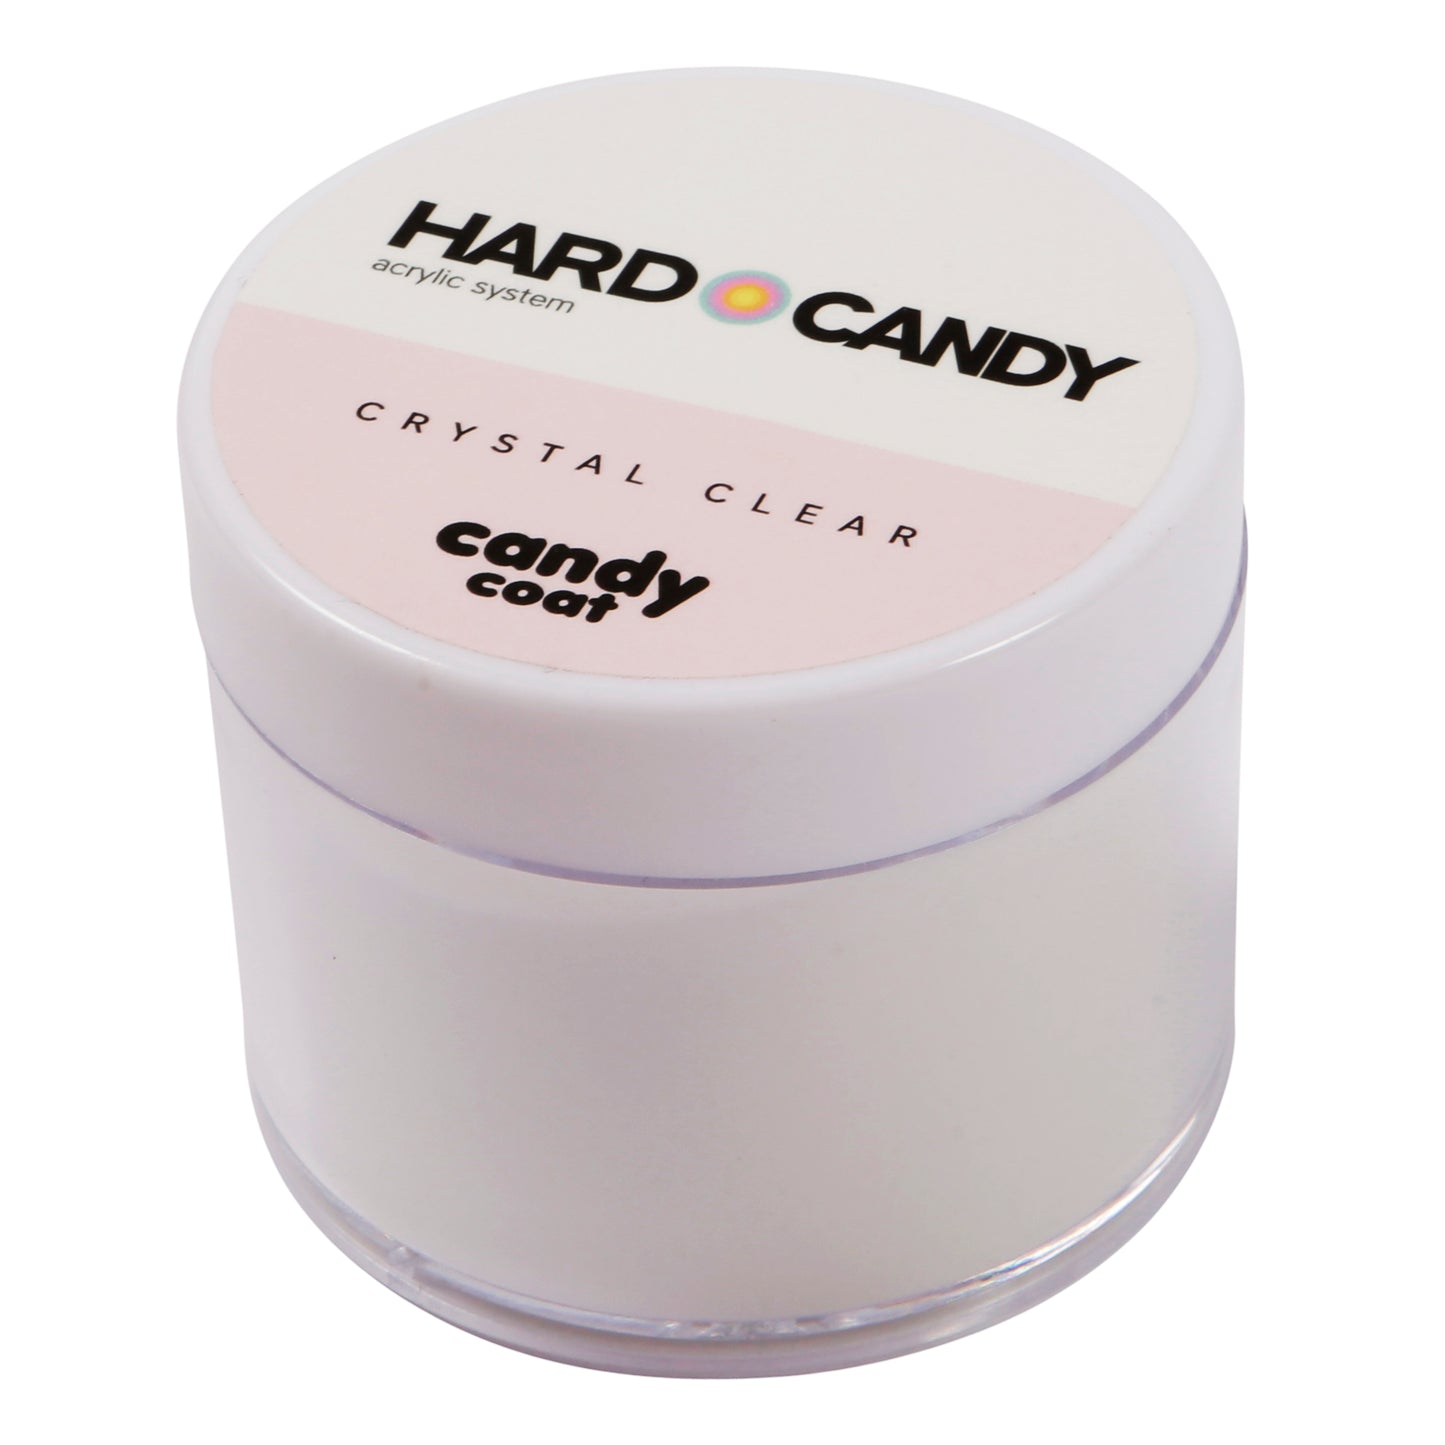 Hard Candy Acrylic - Crystal Clear - Candy Coat